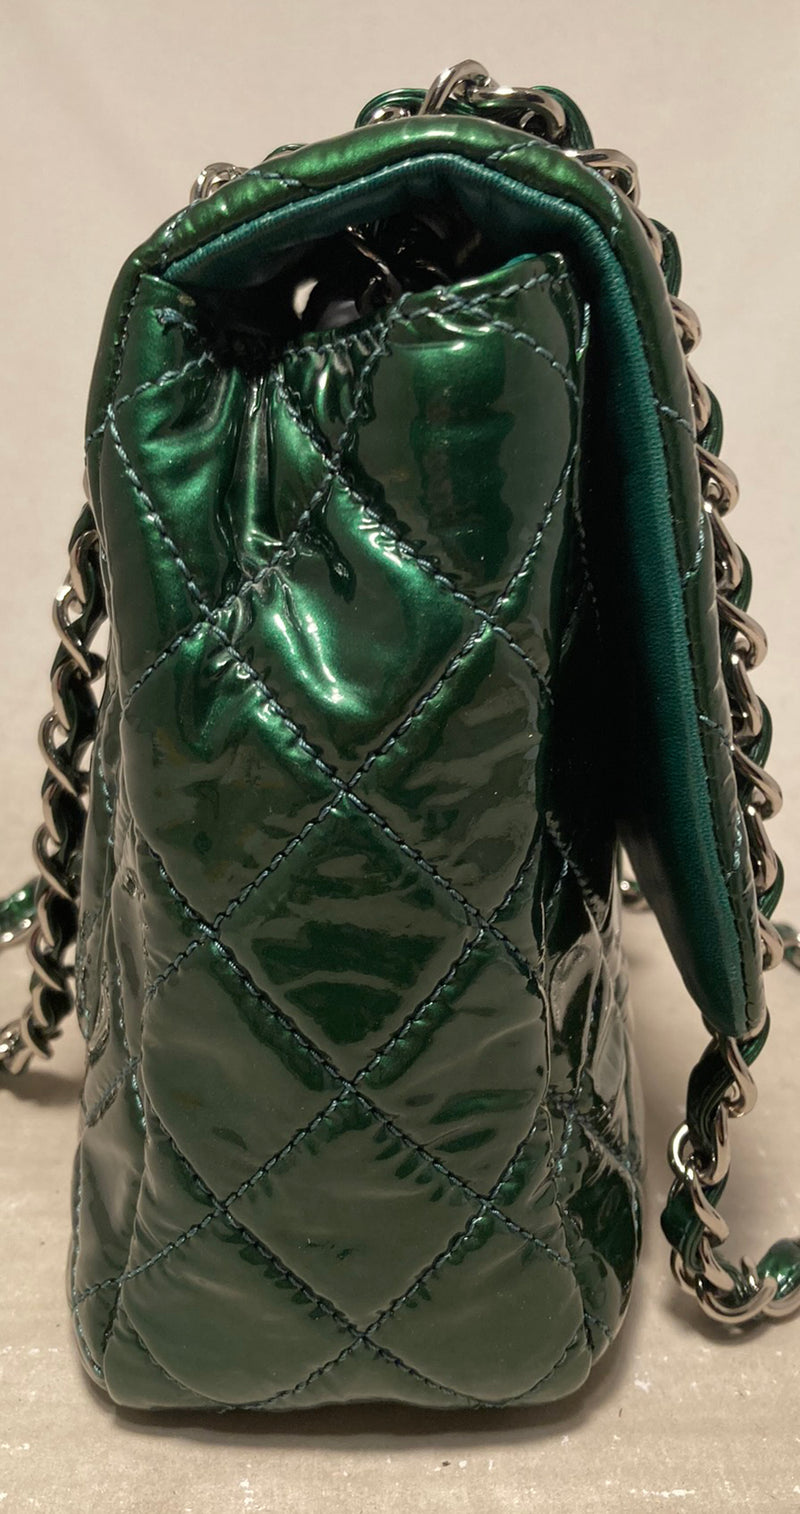 RARE Chanel Metallic Green Patent Leather Jumbo Classic Flap